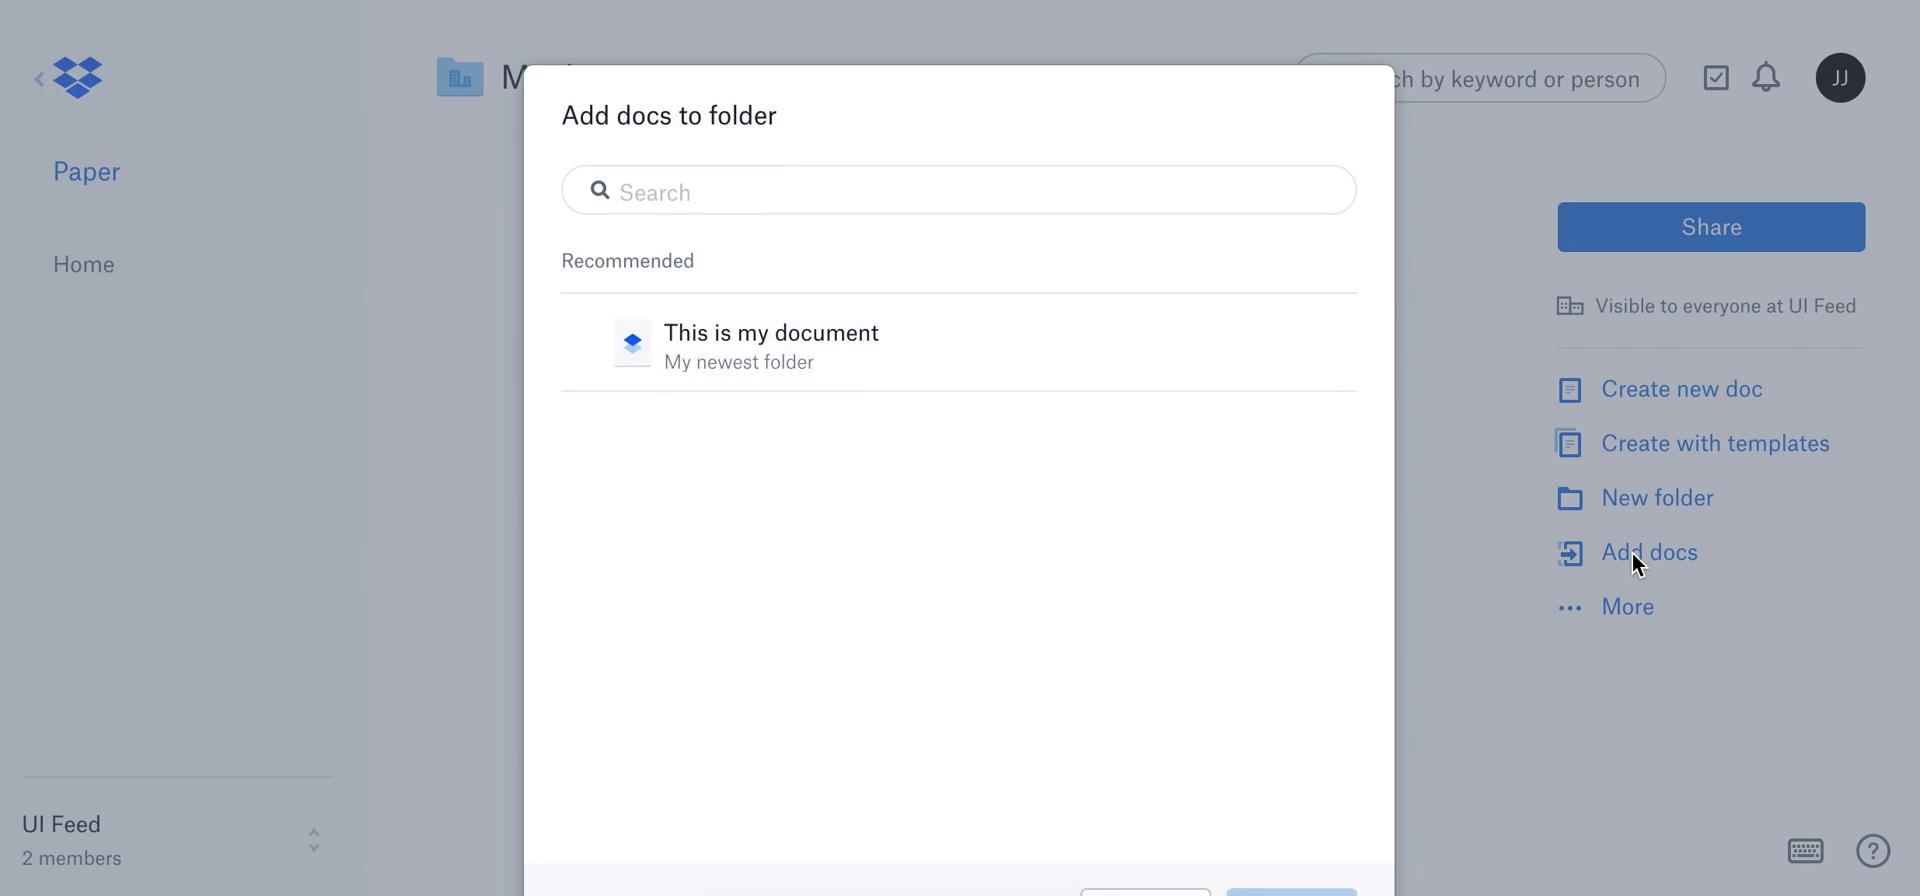 Screenshot of Add to folder on General browsing on Dropbox Paper user flow